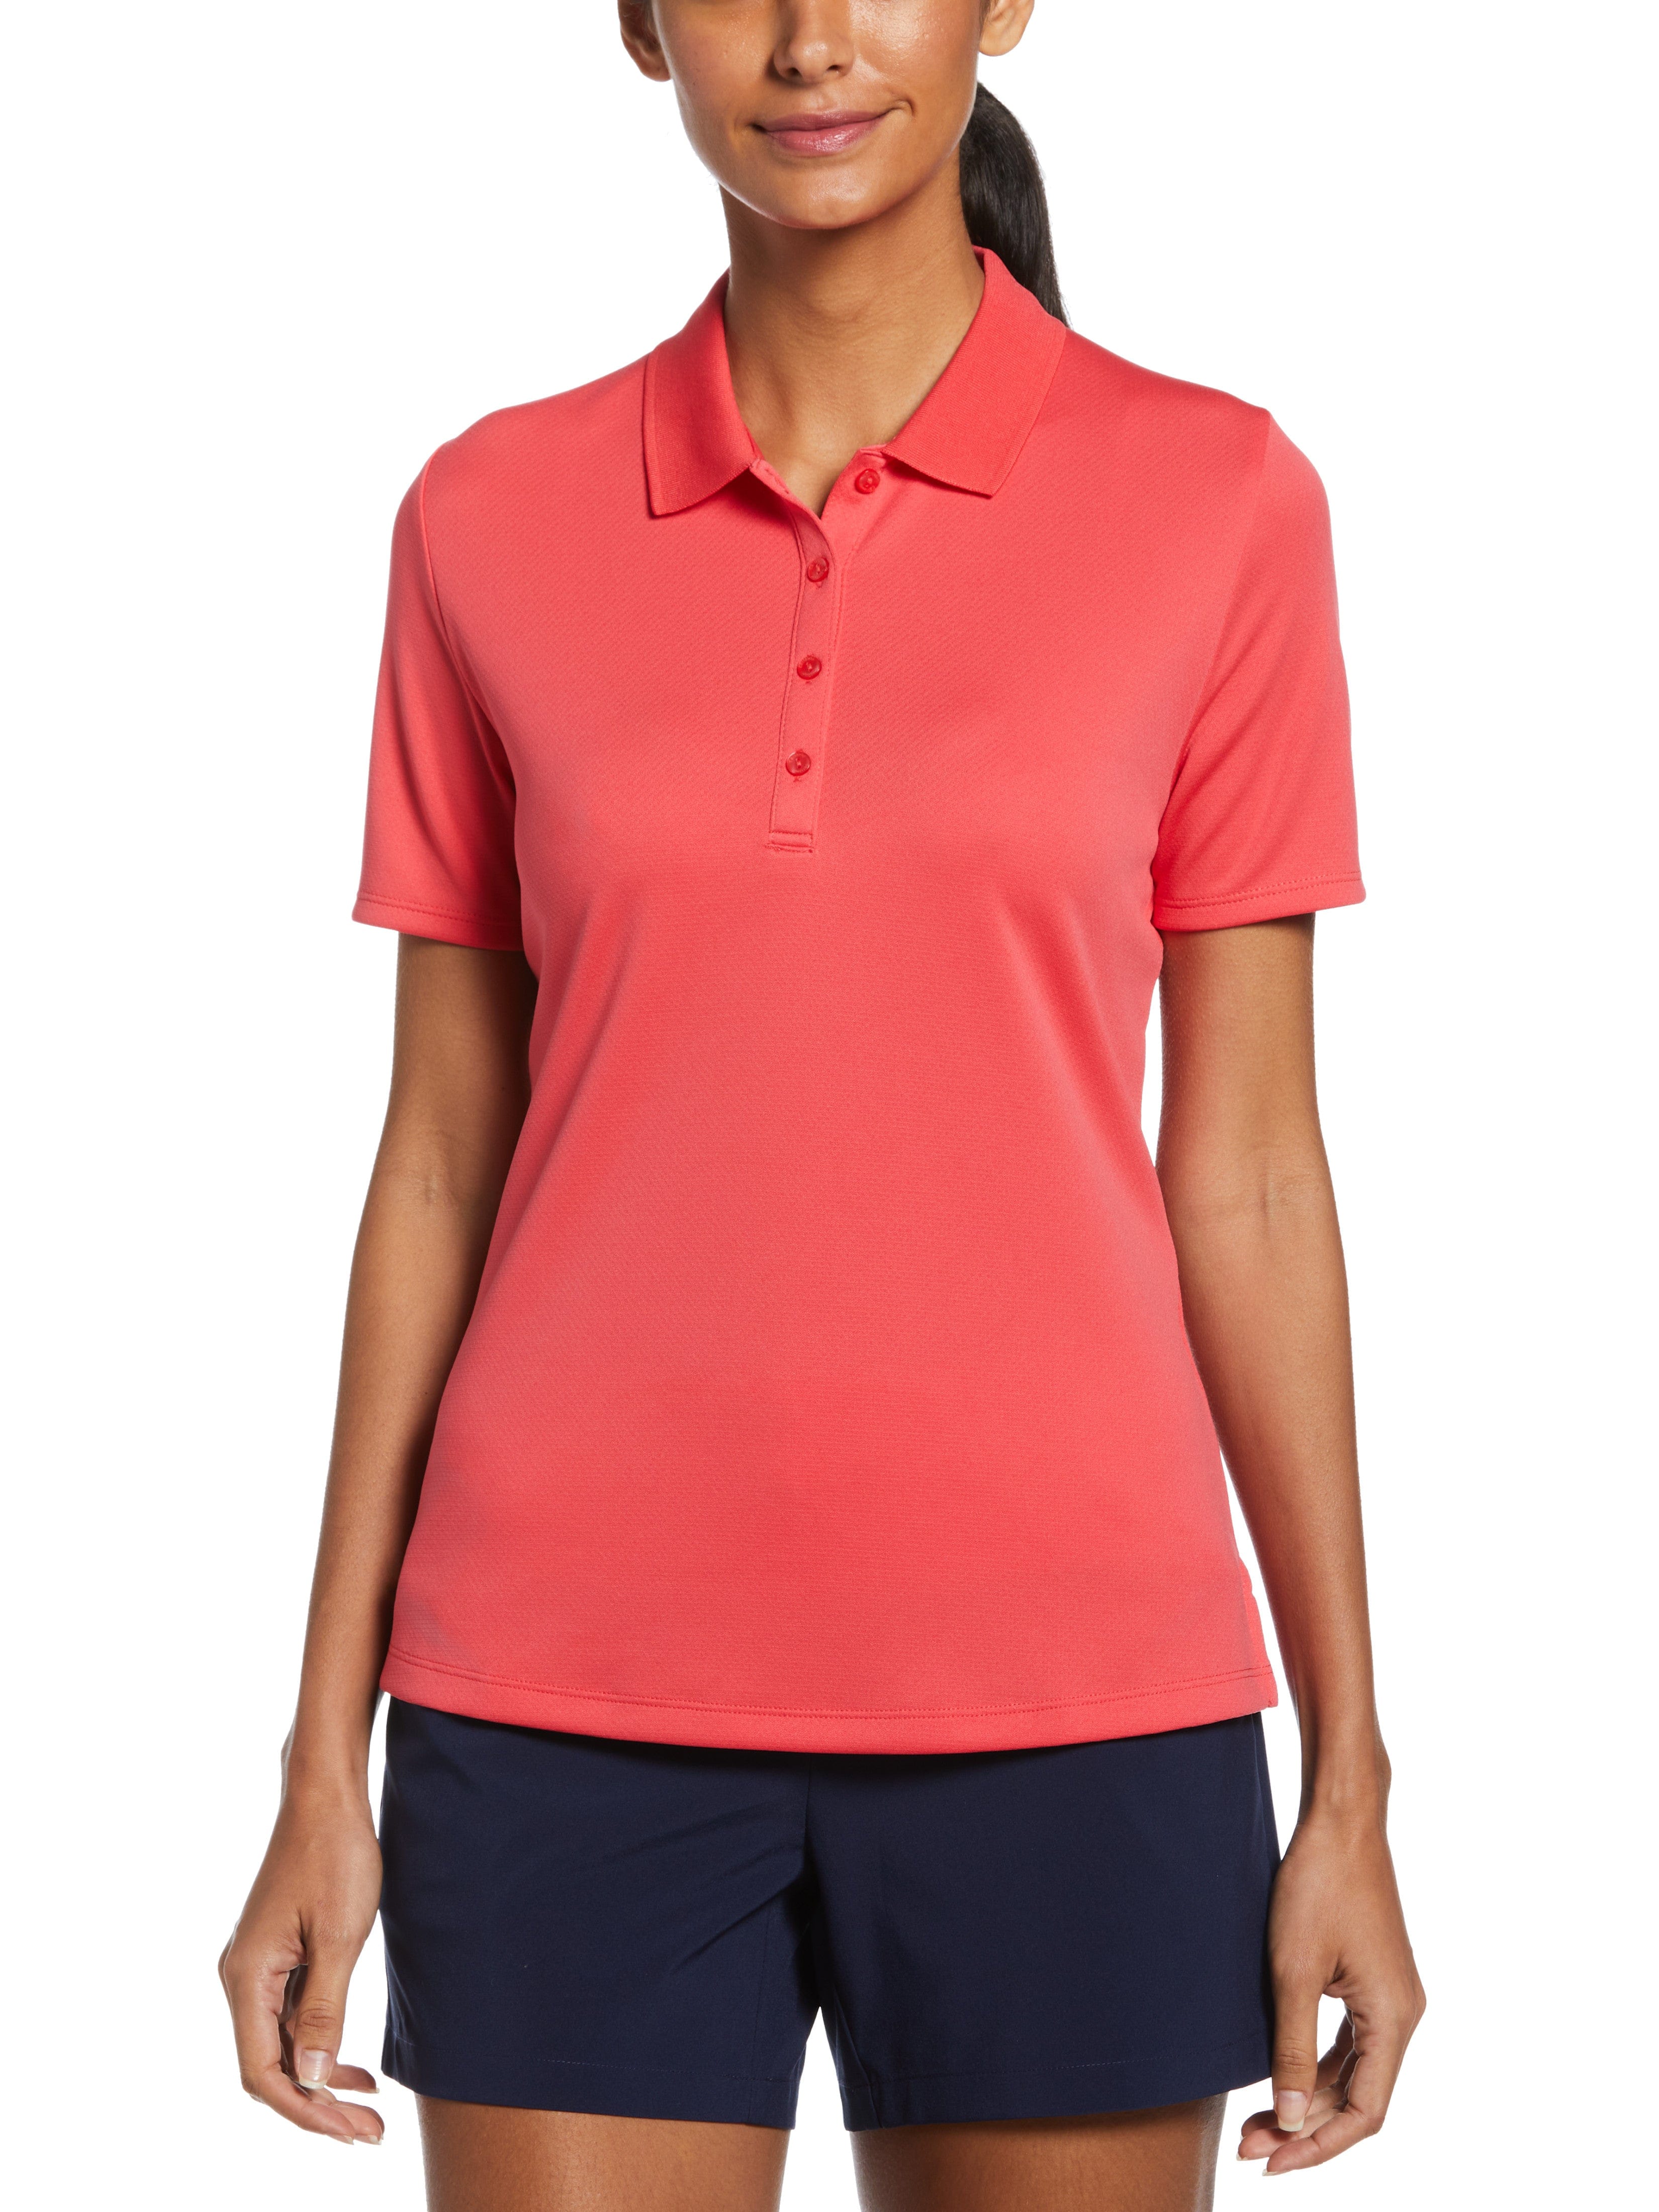 Callaway Apparel Womens Swing Tech™ Solid Polo Shirt, Size Small, Geranium Pink, 100% Polyester | Golf Apparel Shop